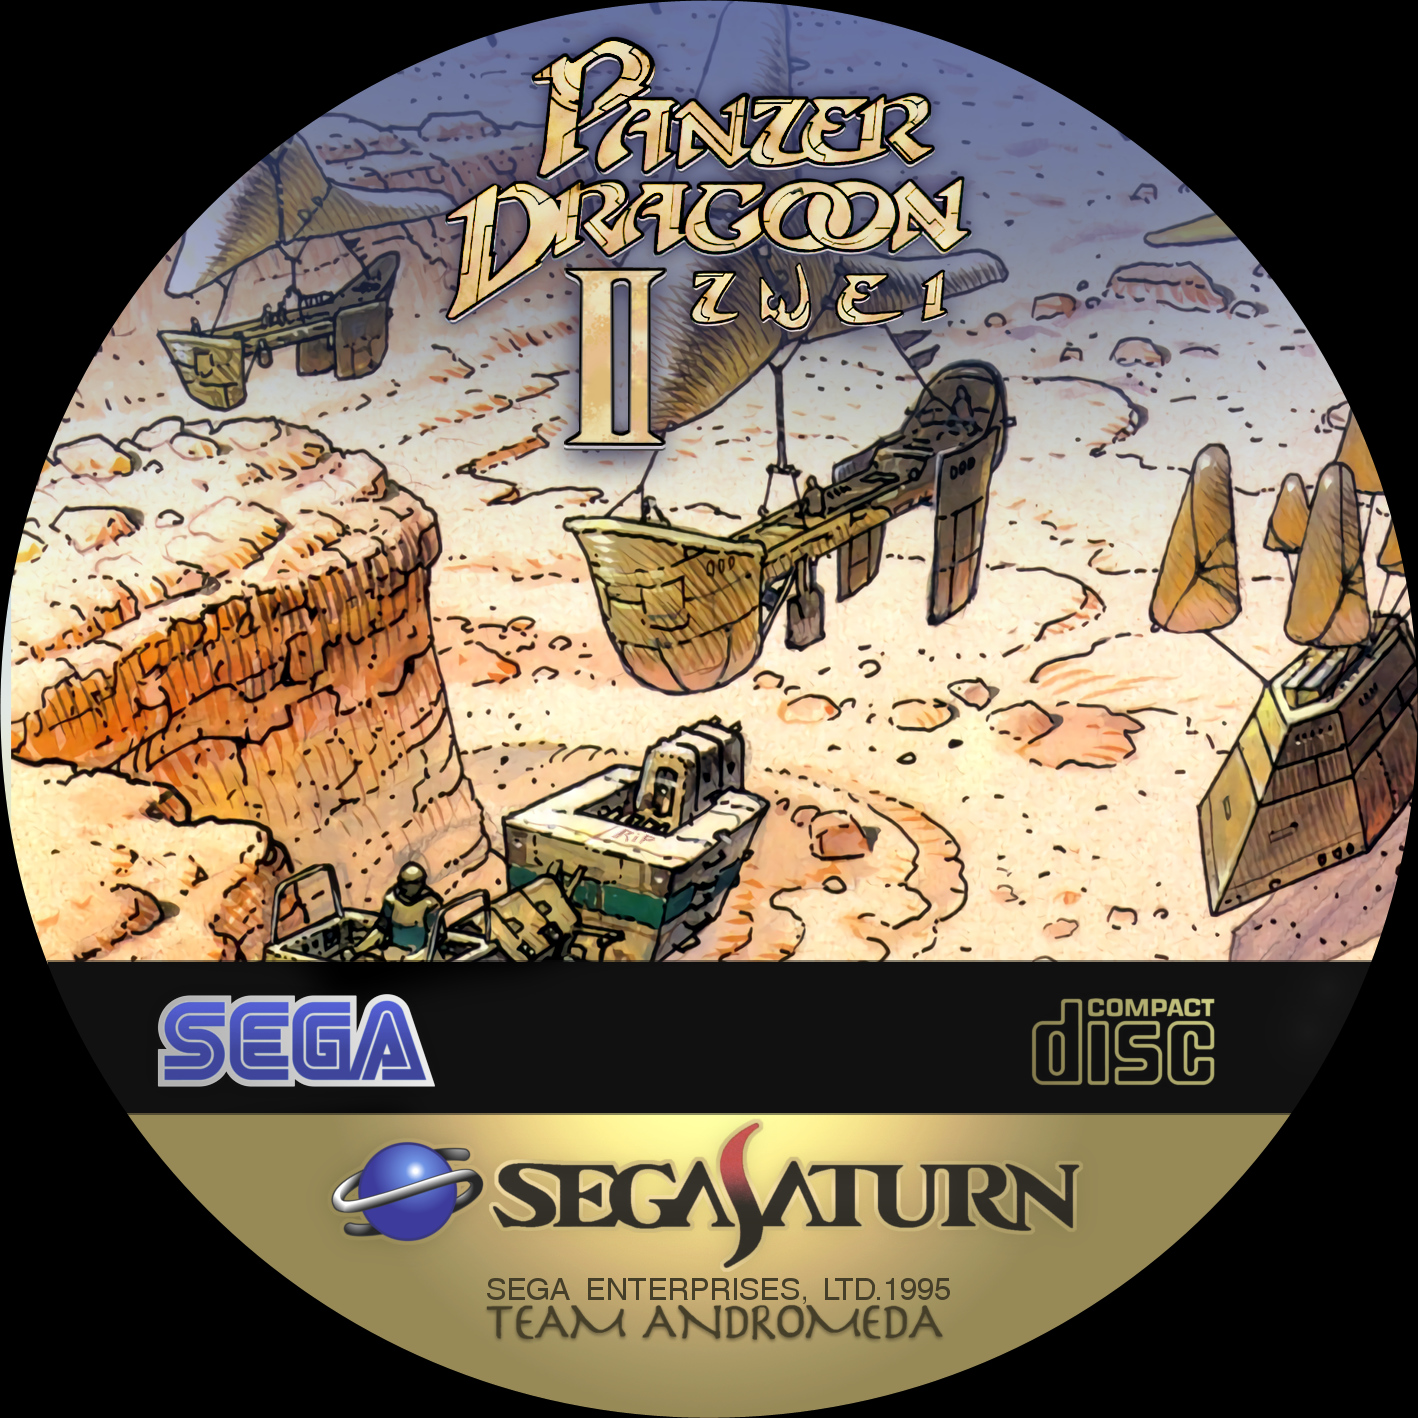 download panzer dragoon dreamcast